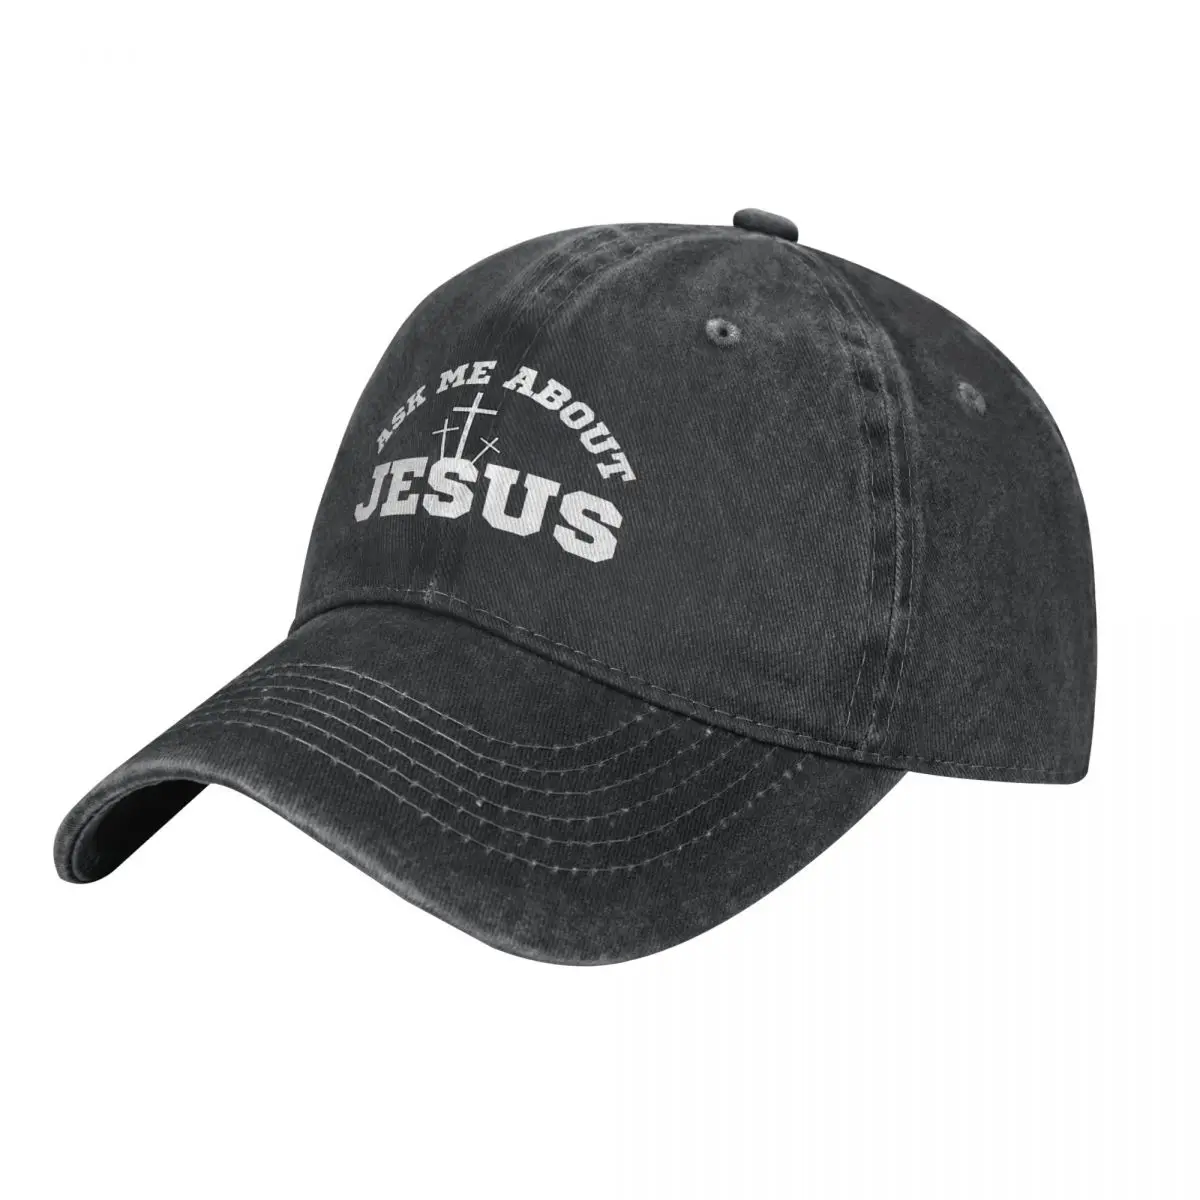 

ask me about jesus Cowboy Hat Cosplay Trucker Hats New In The Hat Trucker Hats For Men Women'S